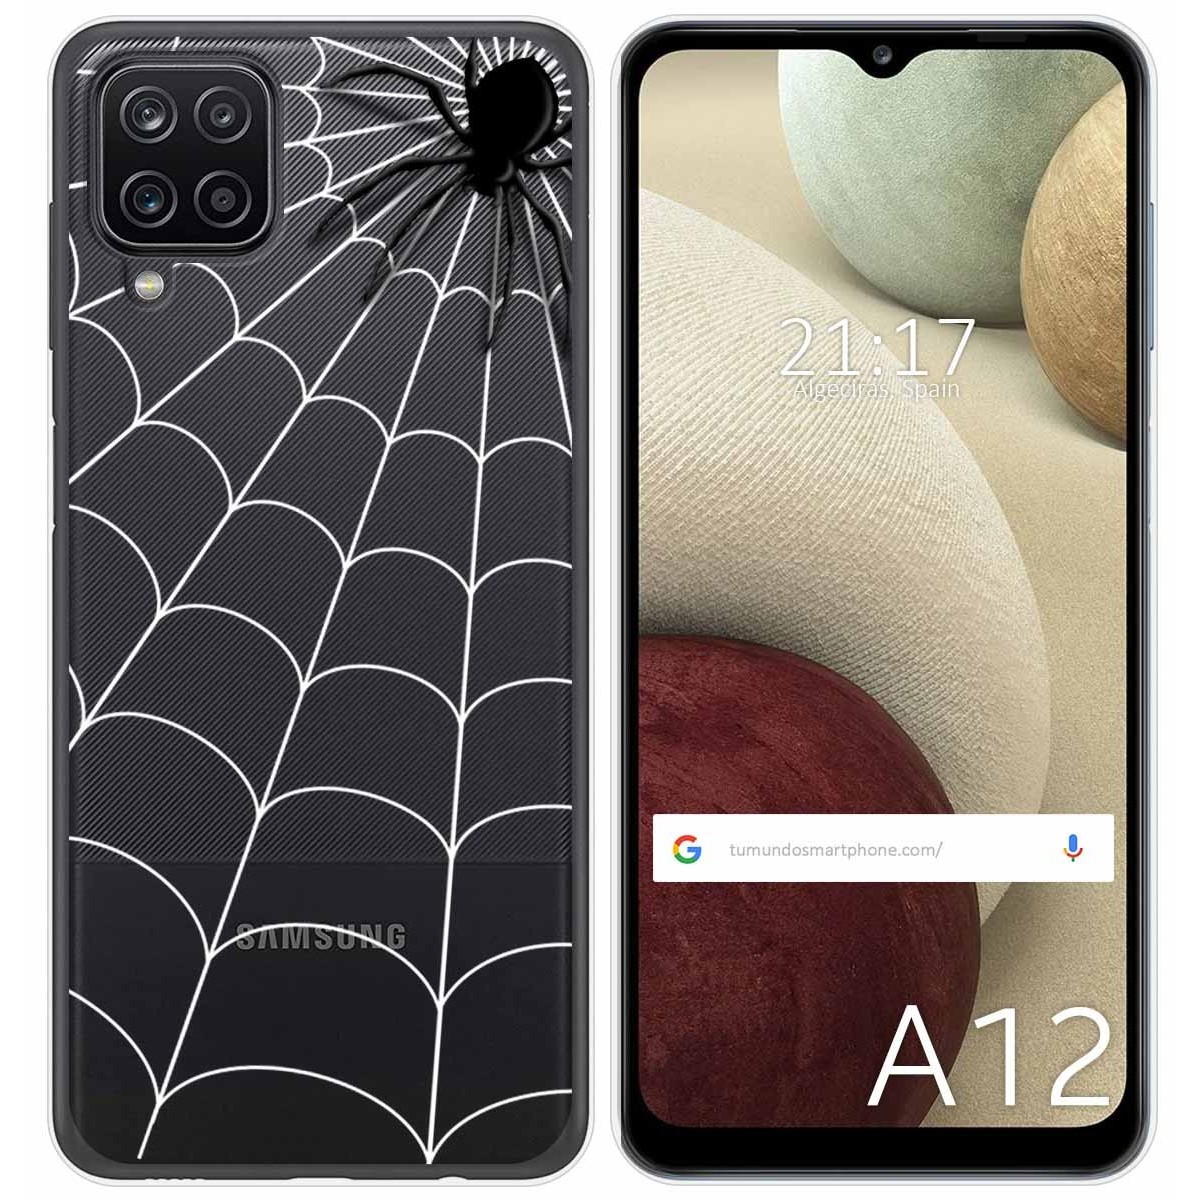 Samsung Galaxy A12 / M12 Funda Gel Tpu Silicona transparente dibujo  Araña|Envio Gratis